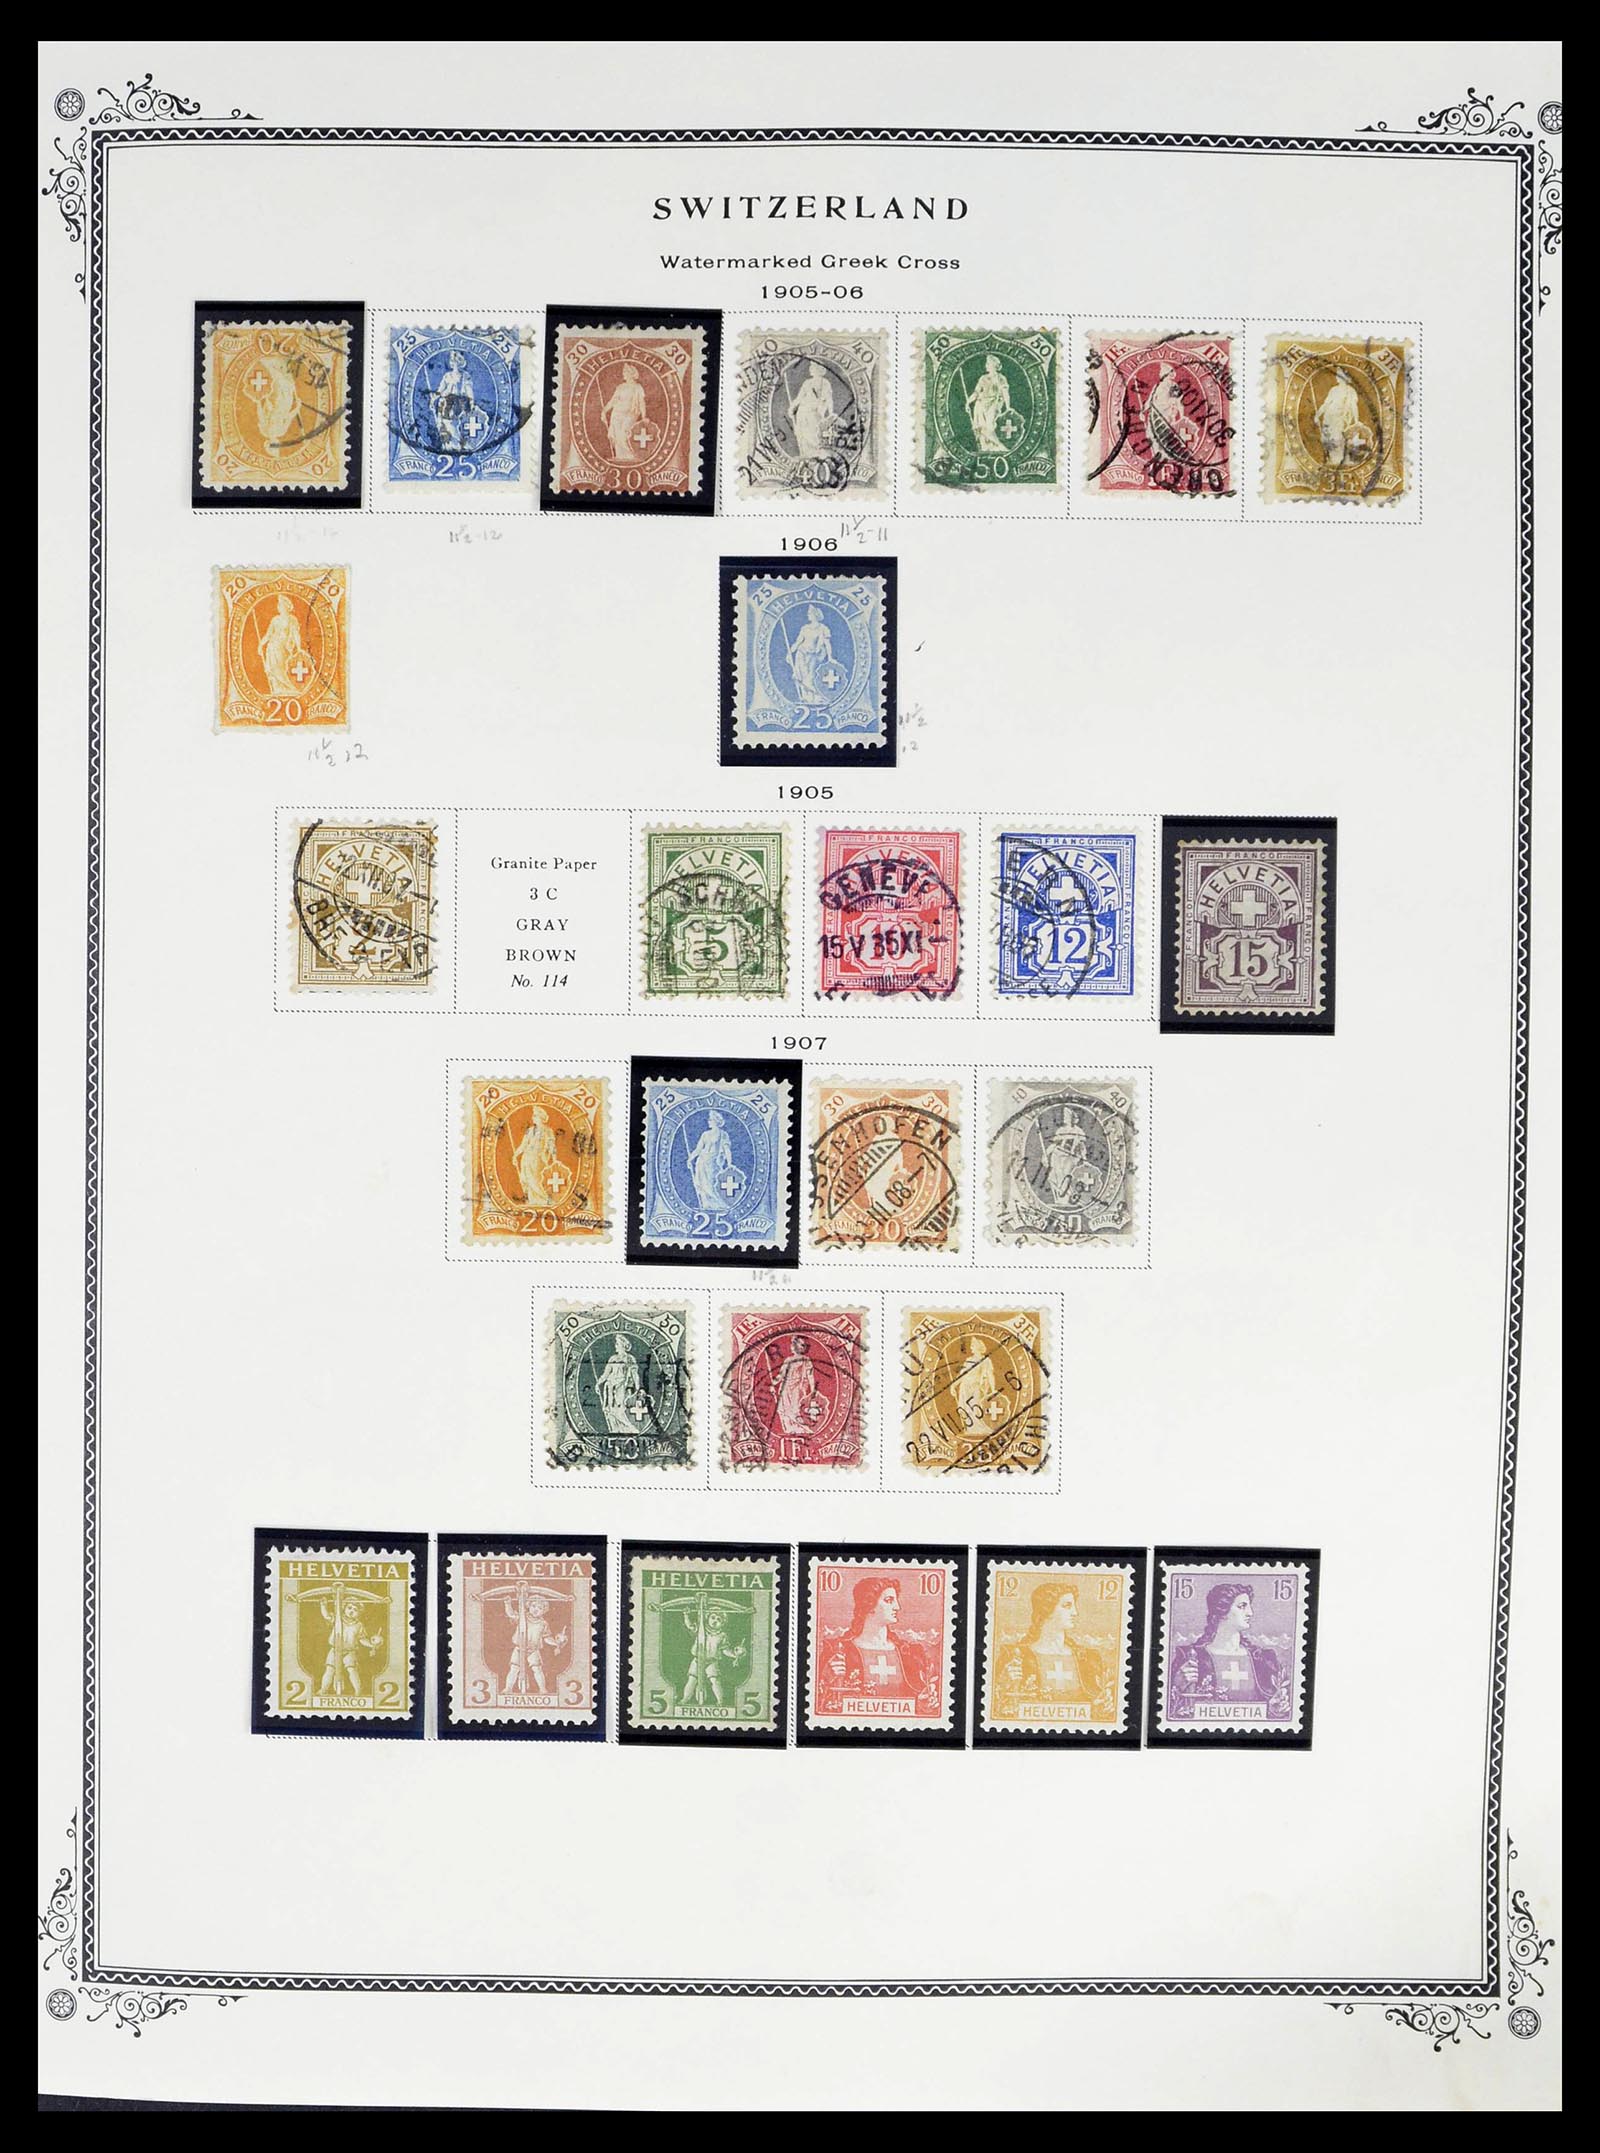 39178 0009 - Stamp collection 39178 Switzerland 1850-1989.